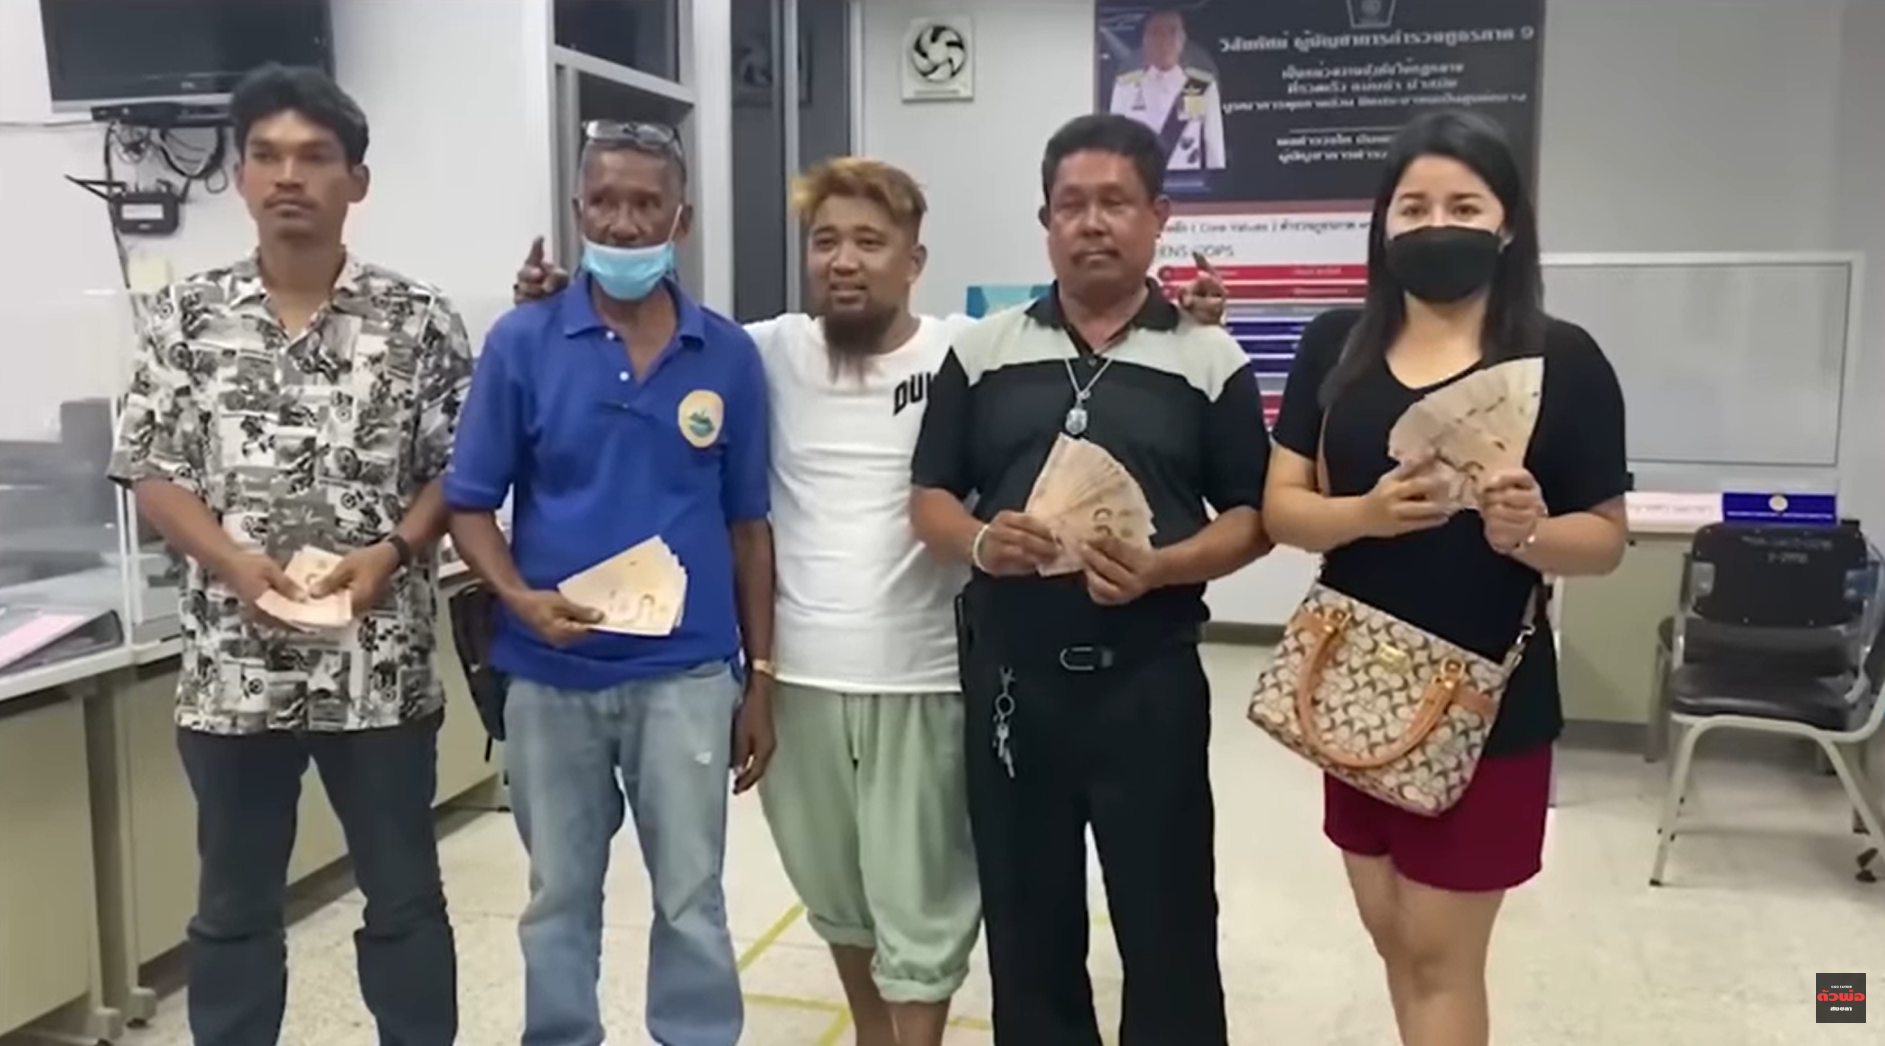 Abdul raii azmi pays thai carowners